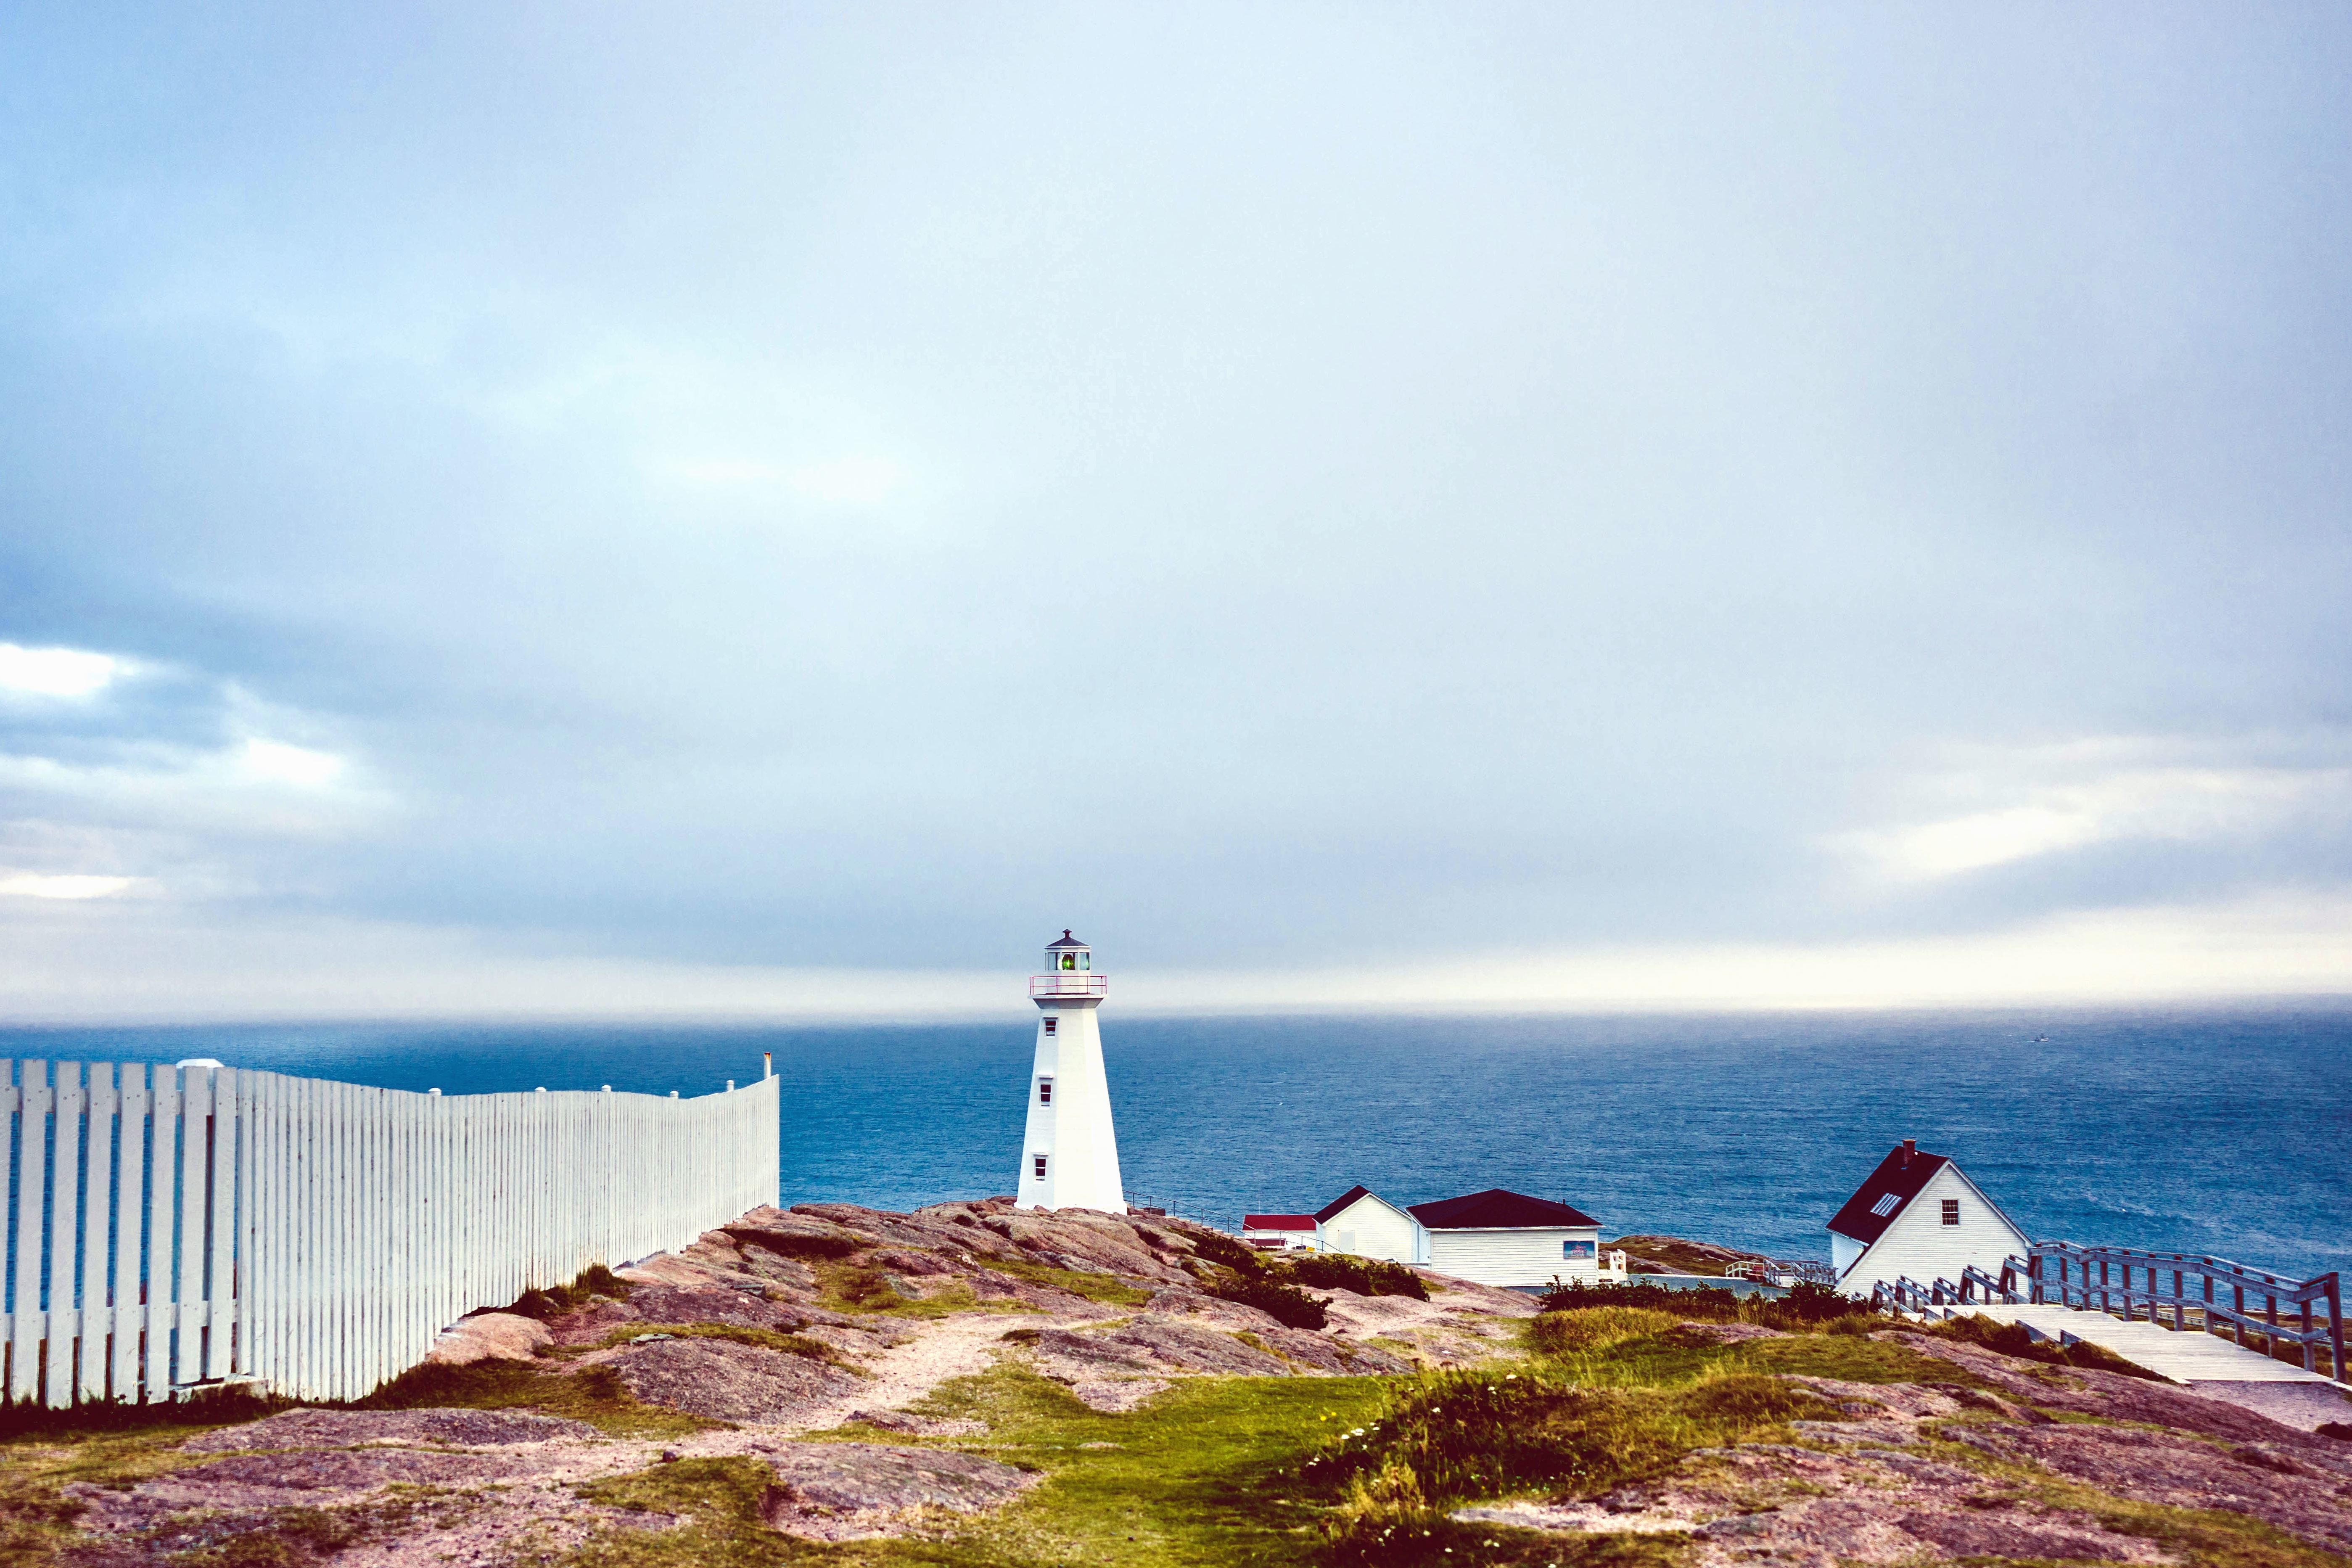 Free picture: lighthouse, sea, mountain, house, coast, architecture